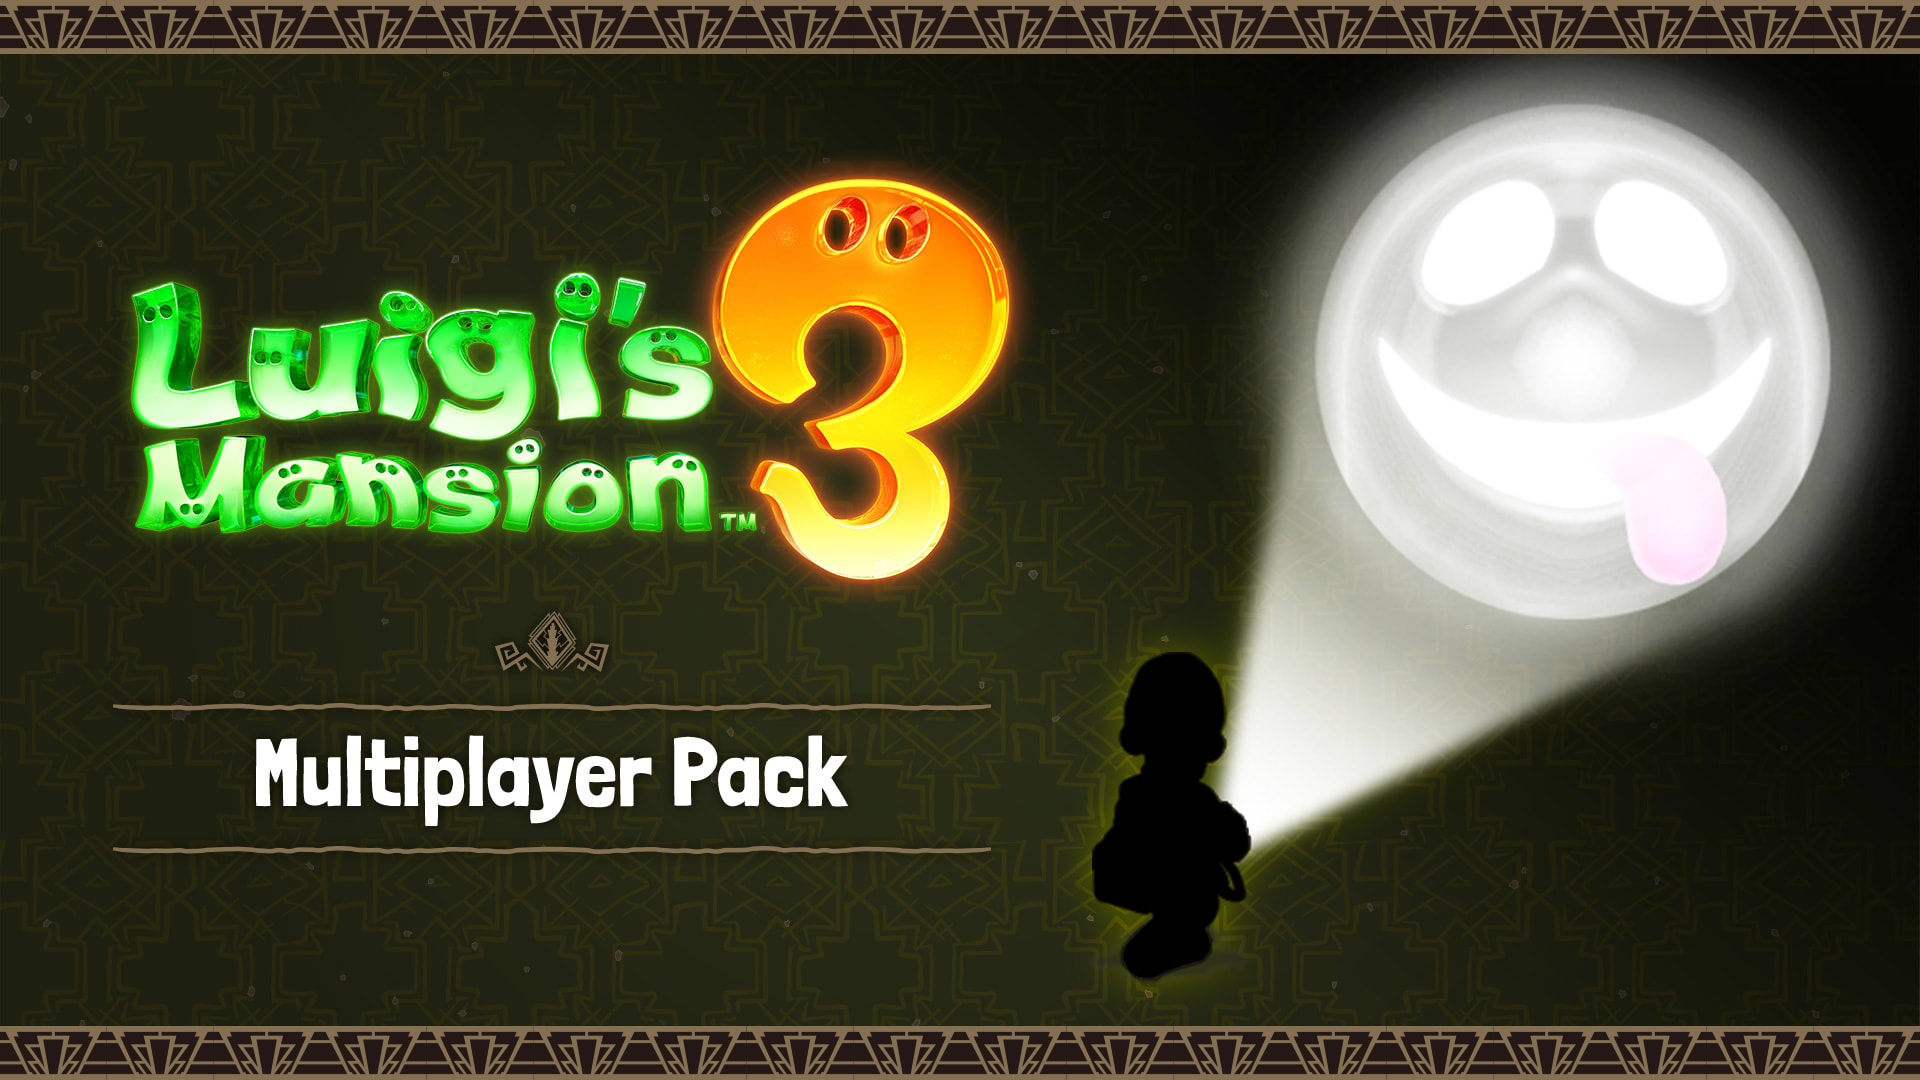 Luigi's Mansion™ 3: Multiplayer Pack